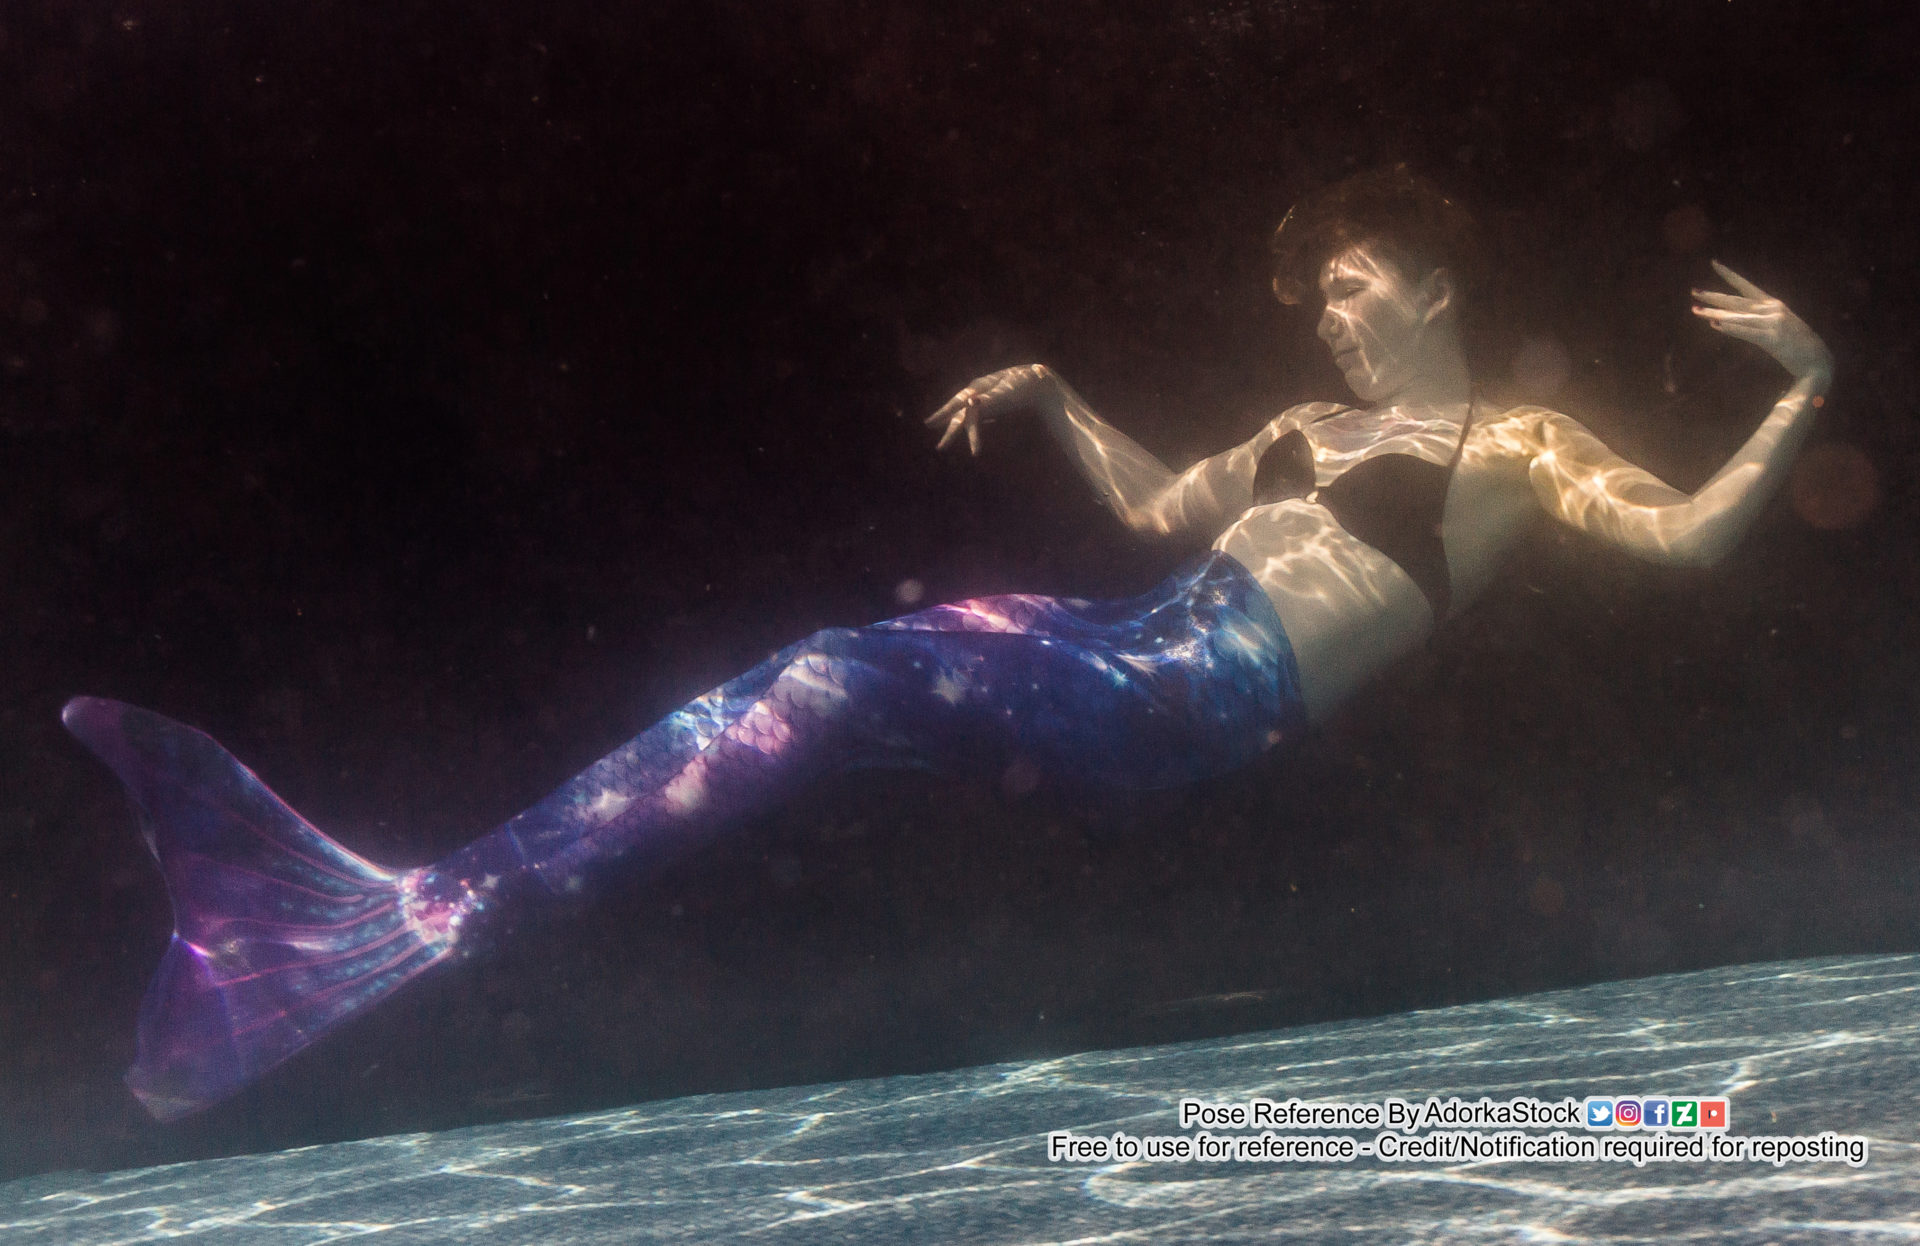 Floating around underwater mermaid pose reference